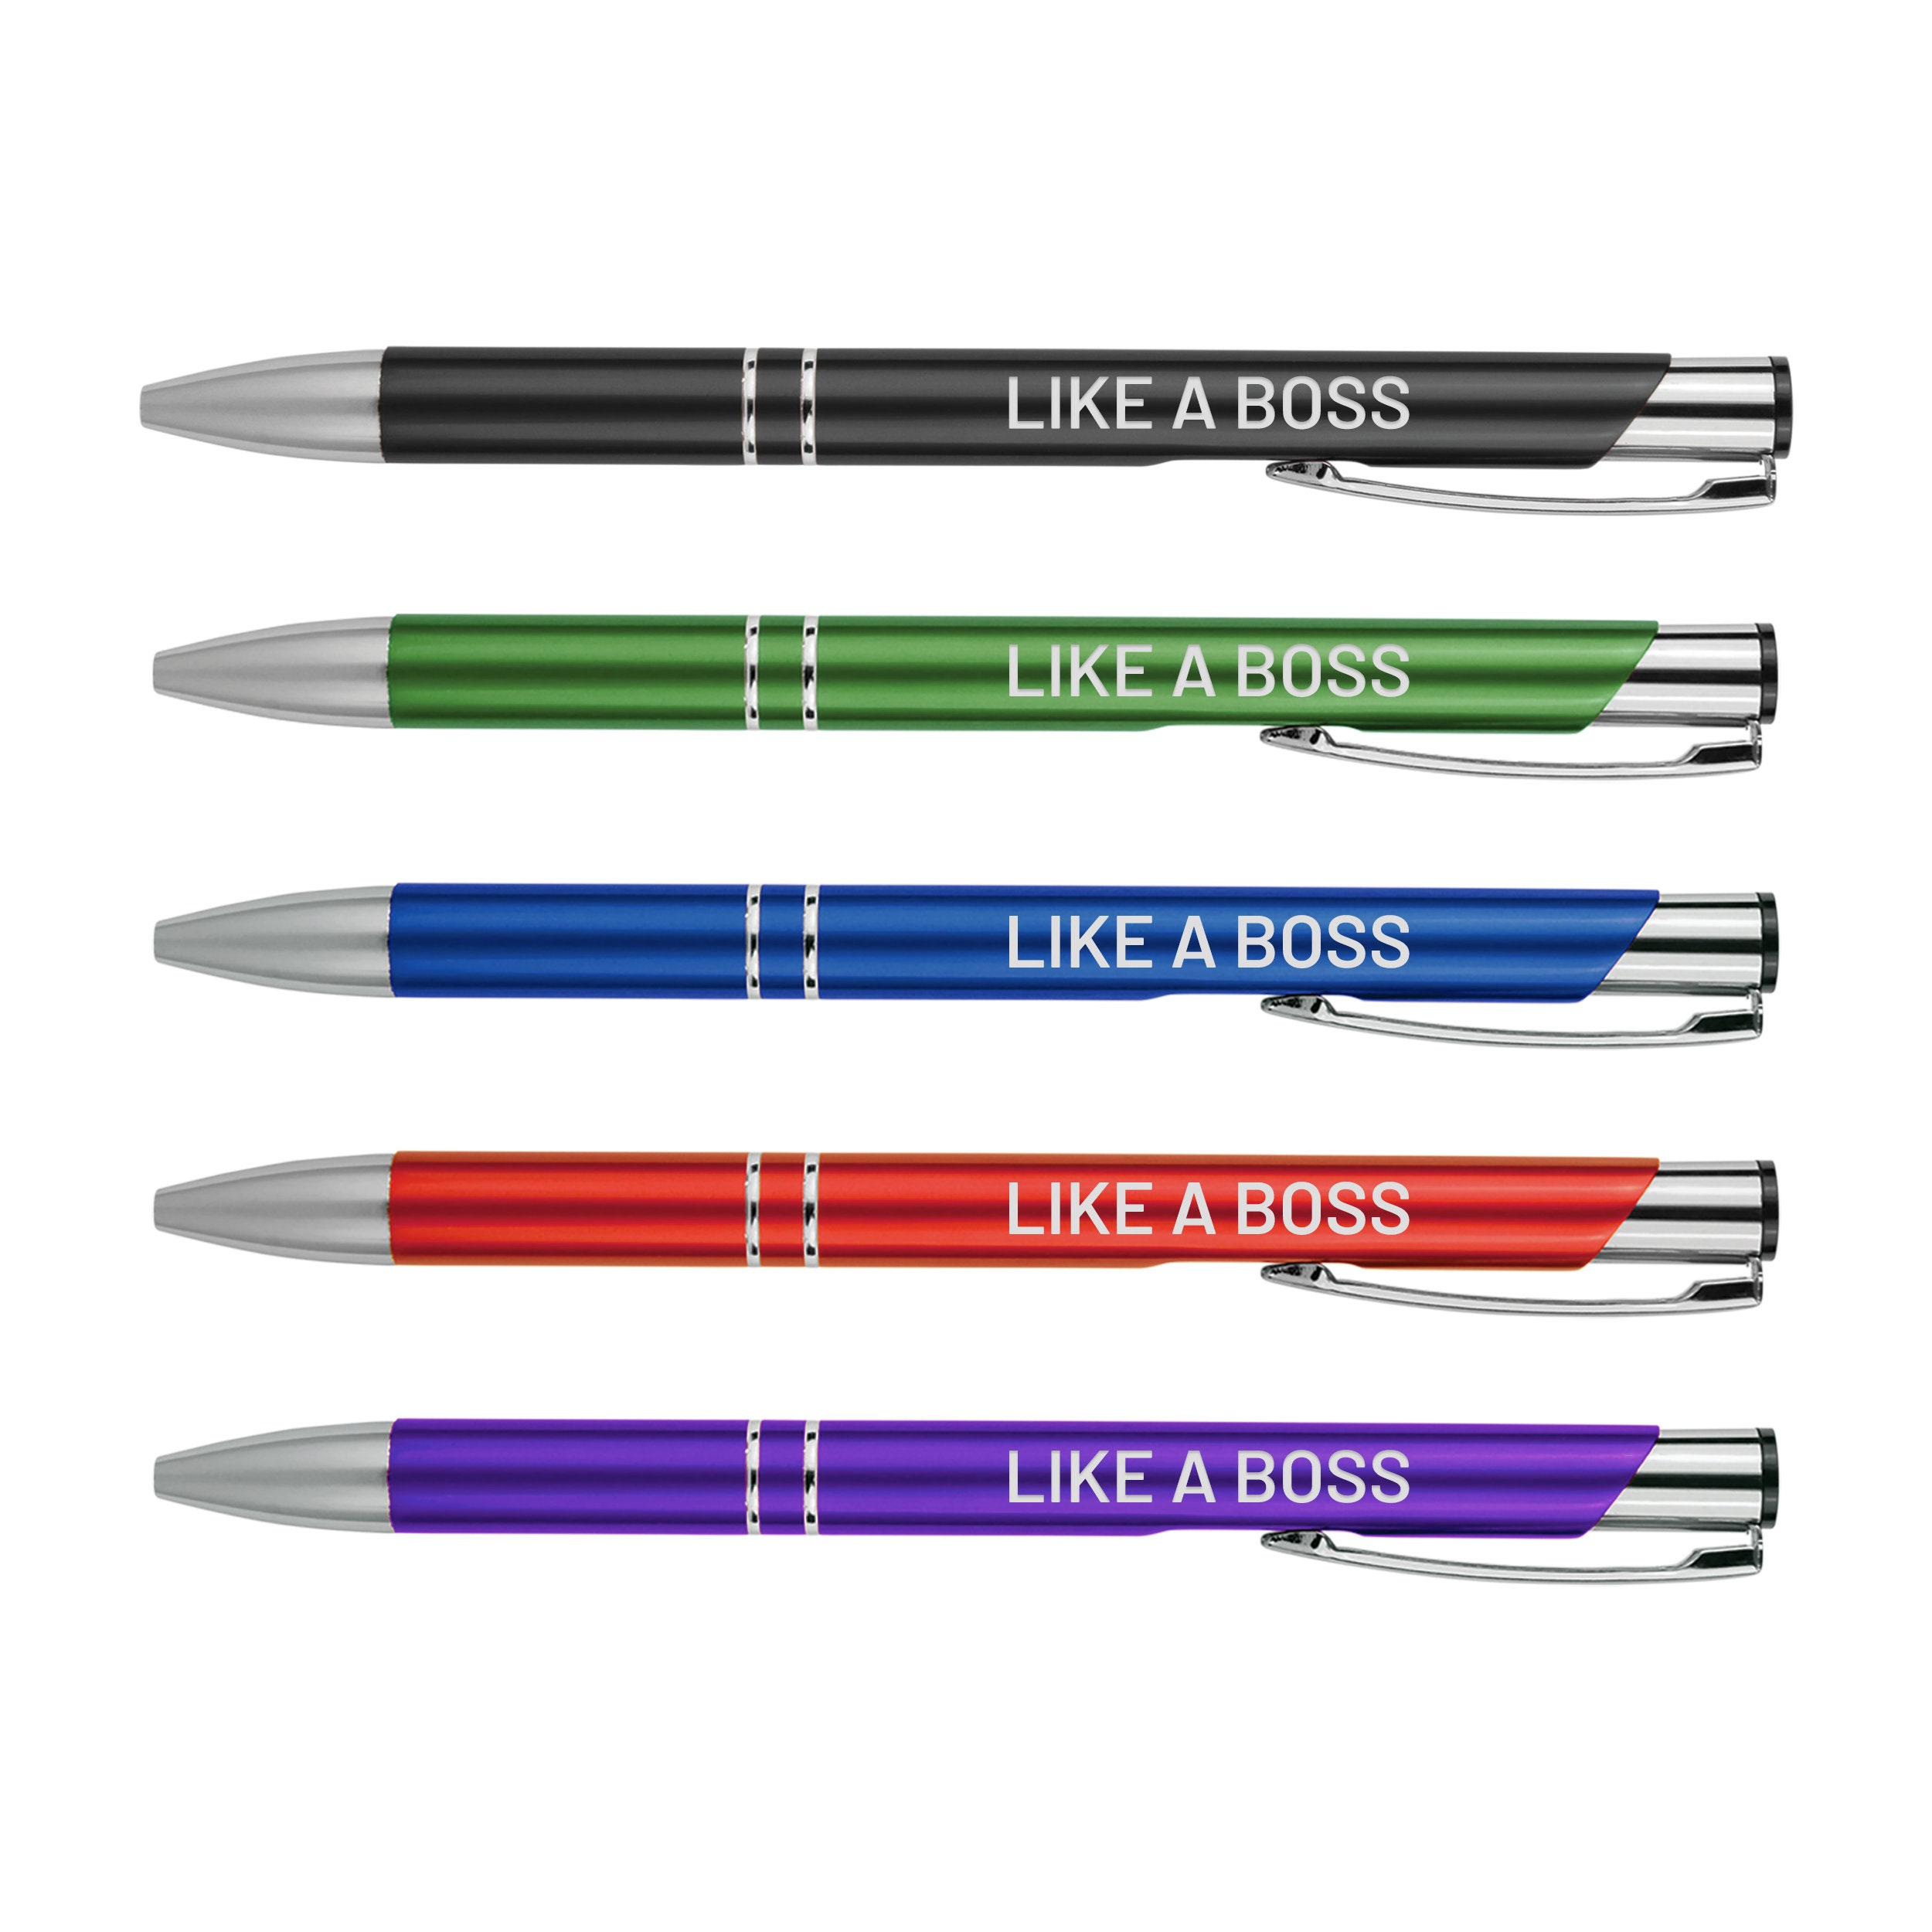 Fancy Pens Set For Women - Nice Pens - Luxury Pen For Boss Lady - Pretty  Cute Pens For Women - Decorative Writing Pens For Journaling - Girl Boss  Inspirational Motivational Pens - Executiv 